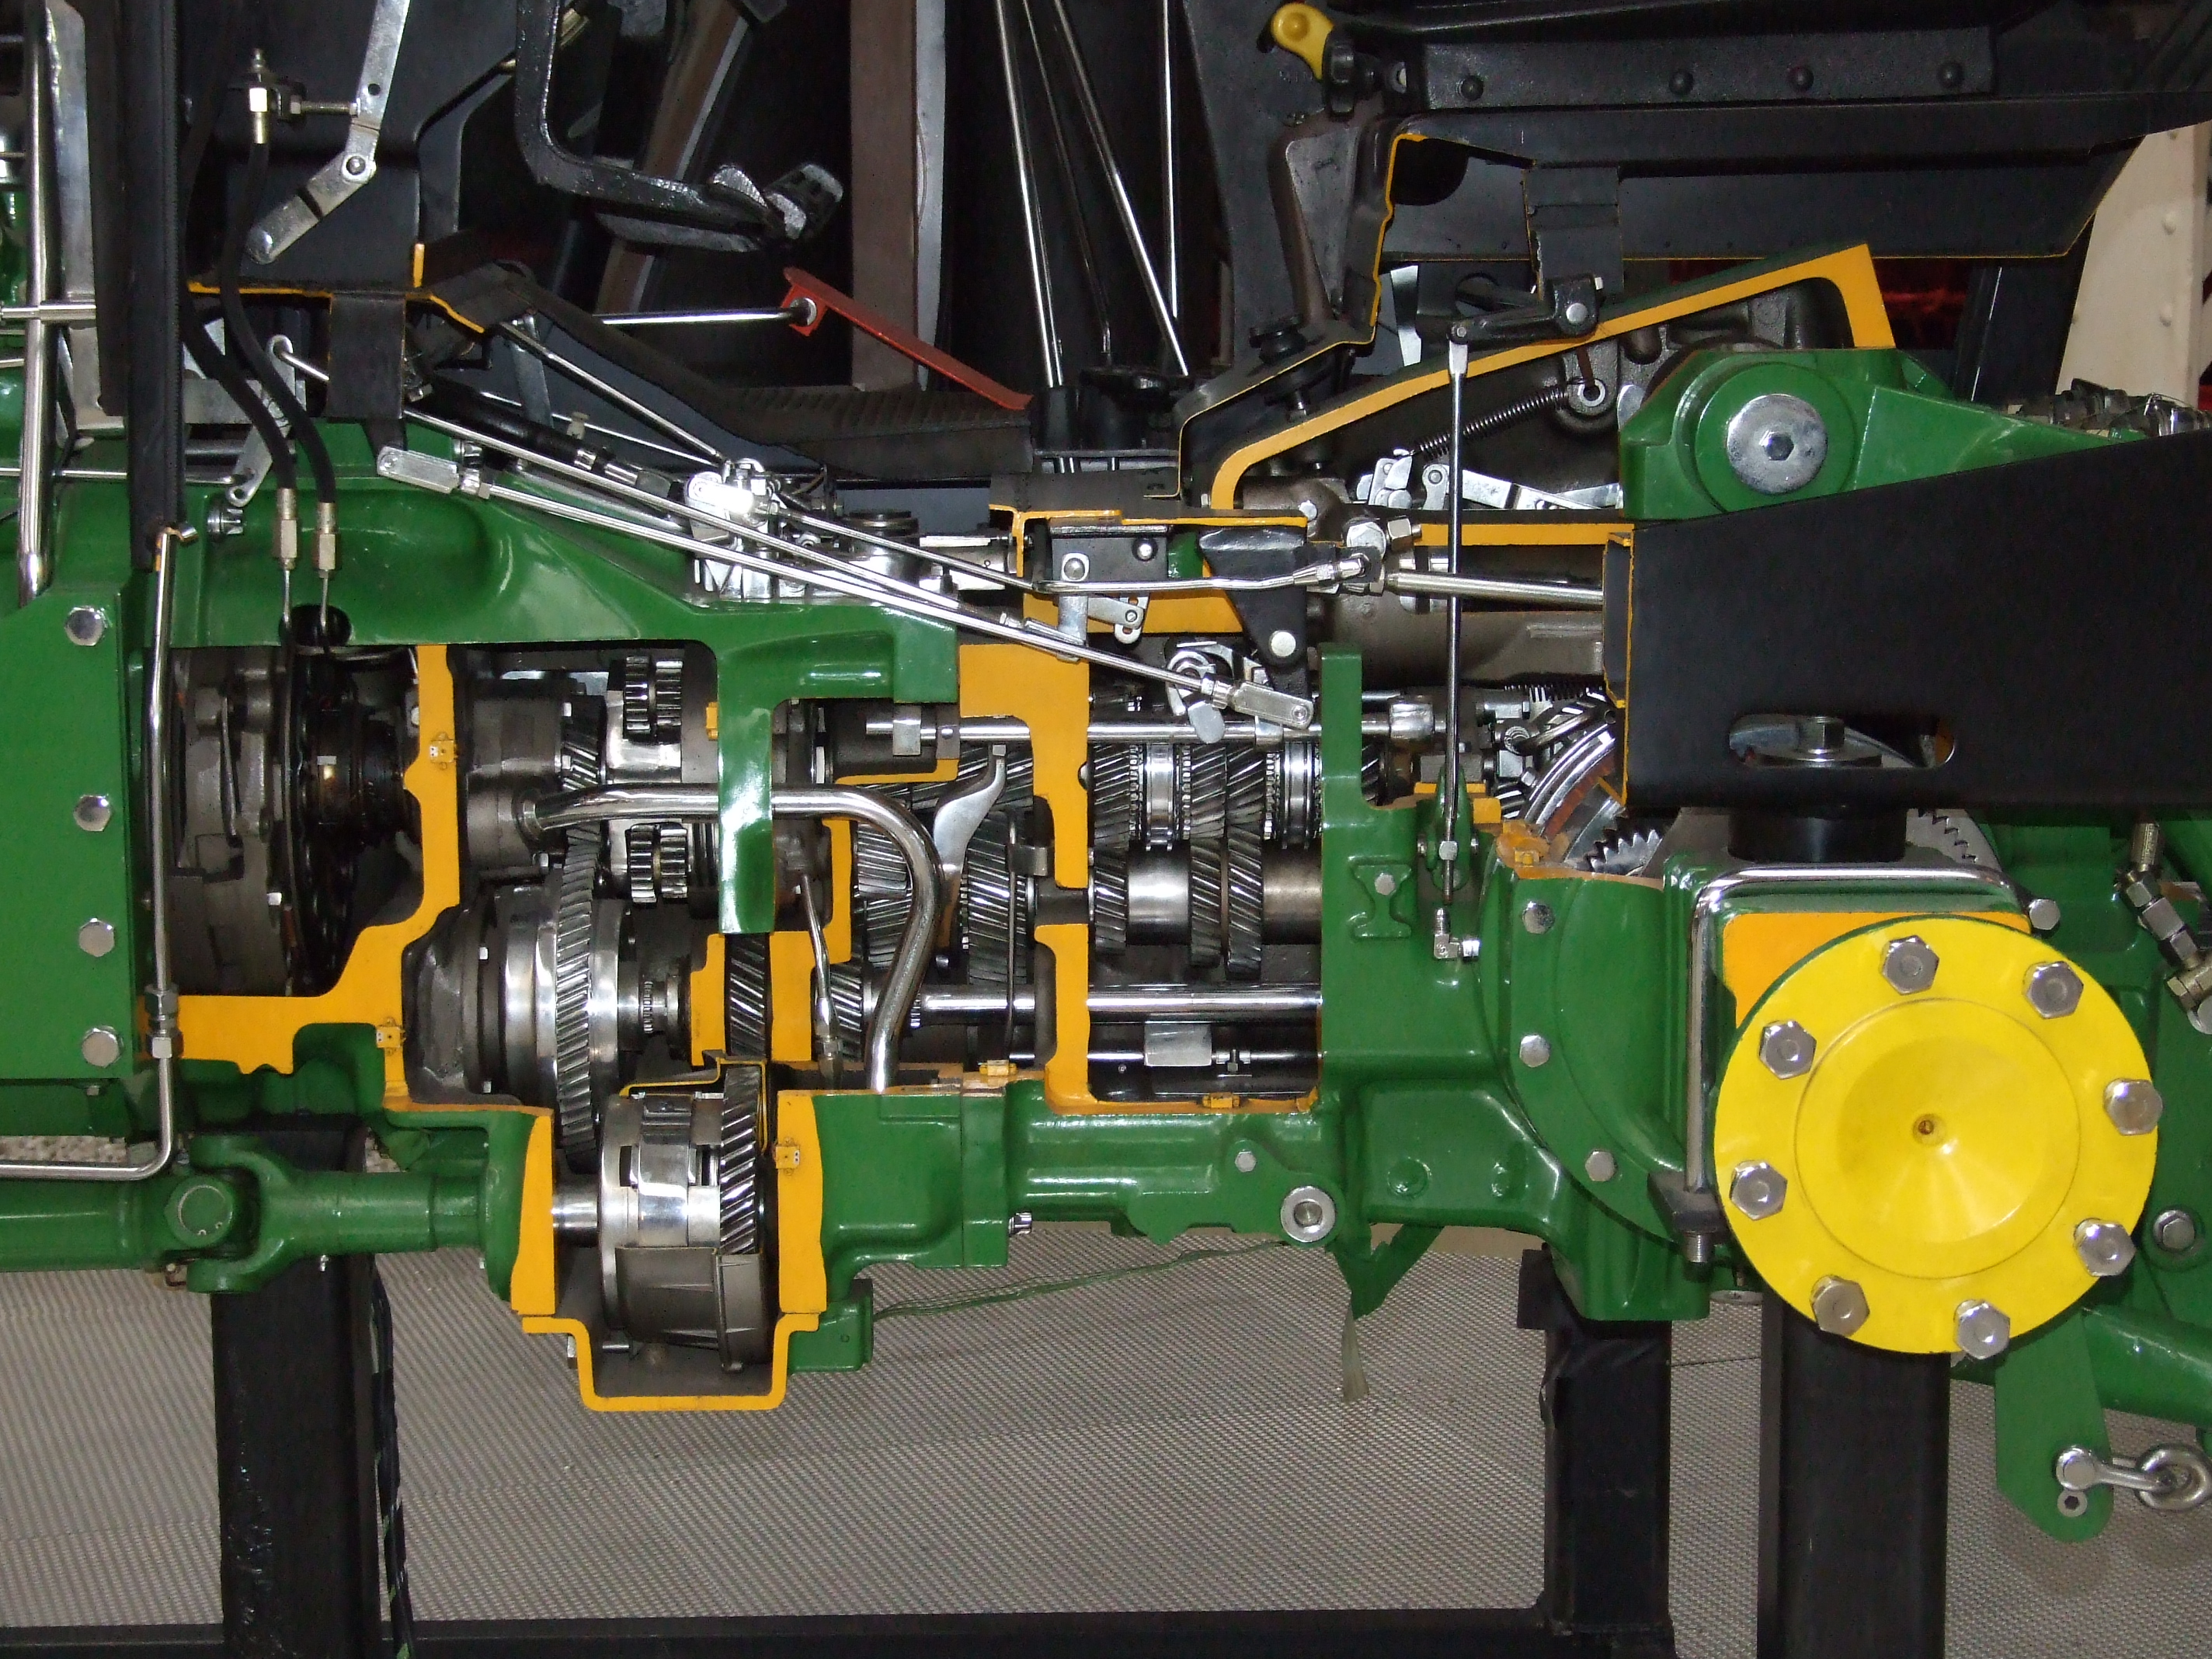 File:John Deere 3350 tractor cut transmission.JPG - Wikipedia